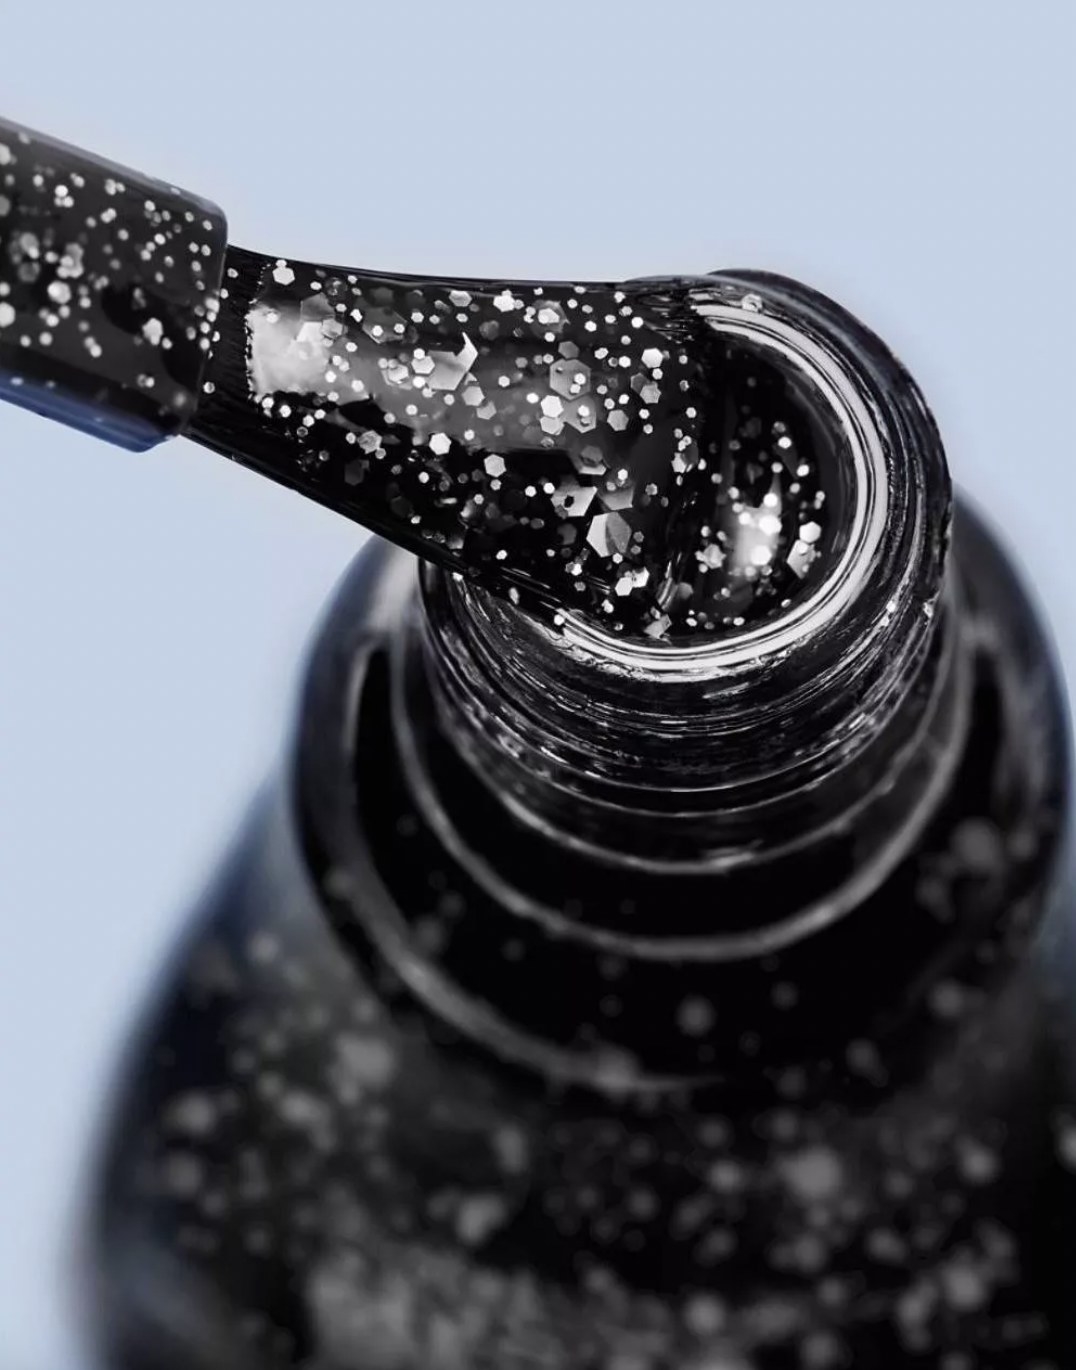 A bottle of black shimmer nail polish